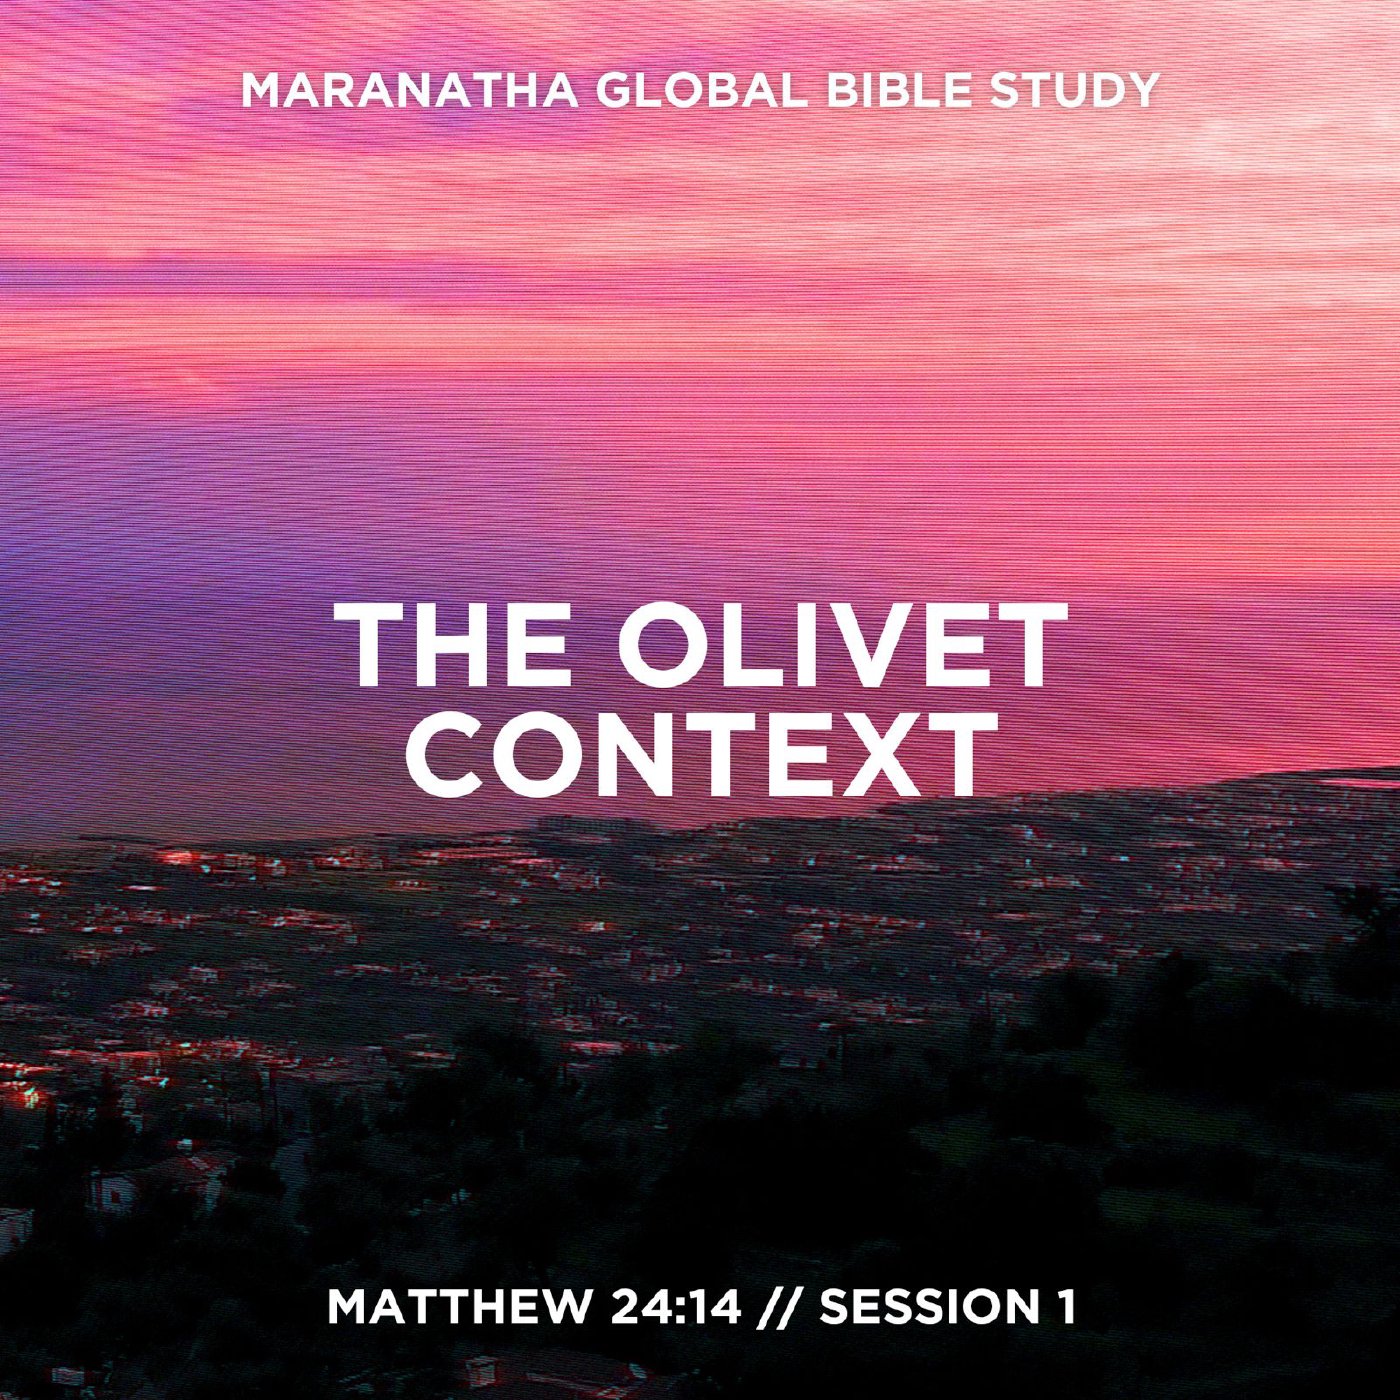 The Olivet Context // MATTHEW 24:14 with GABRIEL CALIGIURI